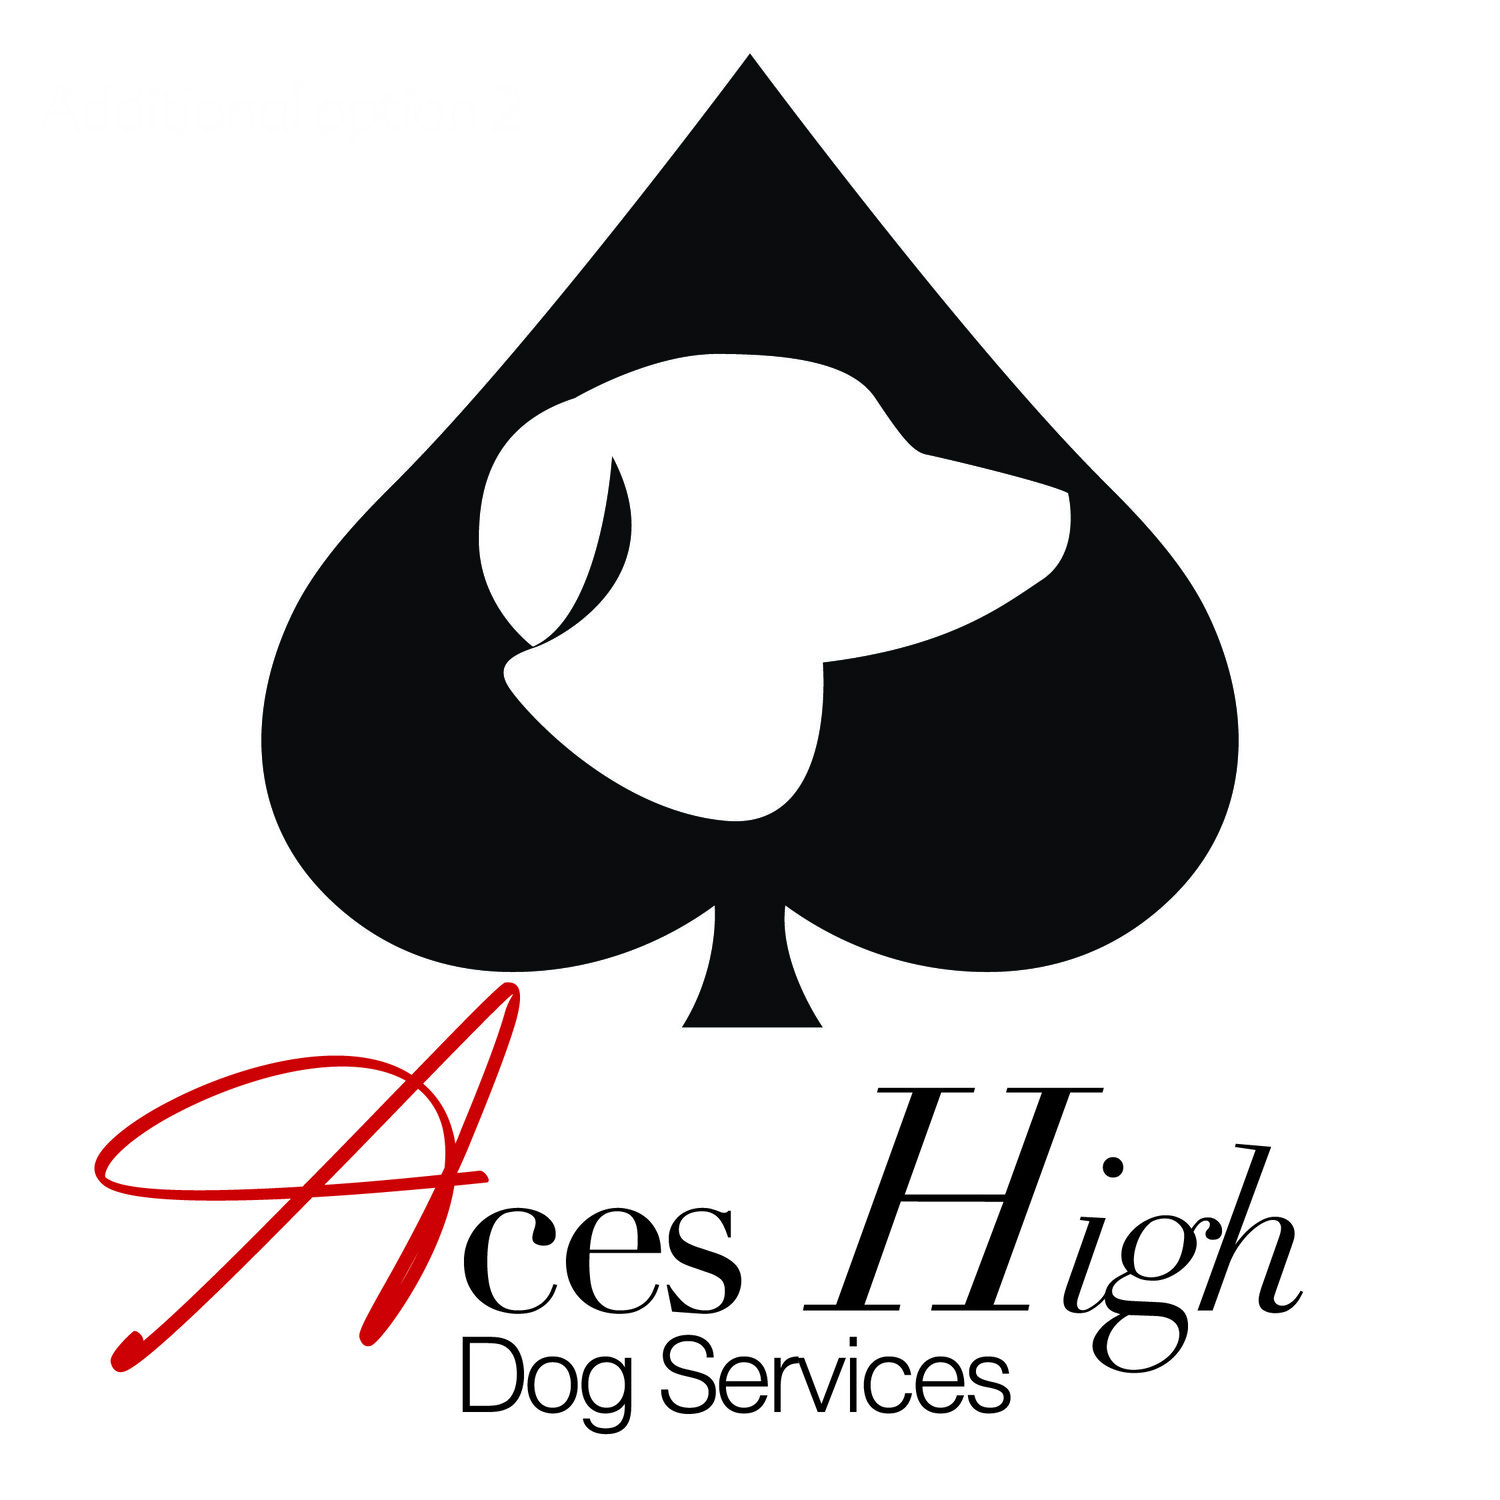 Aces High Dog Services Dog Walking and Dog Training